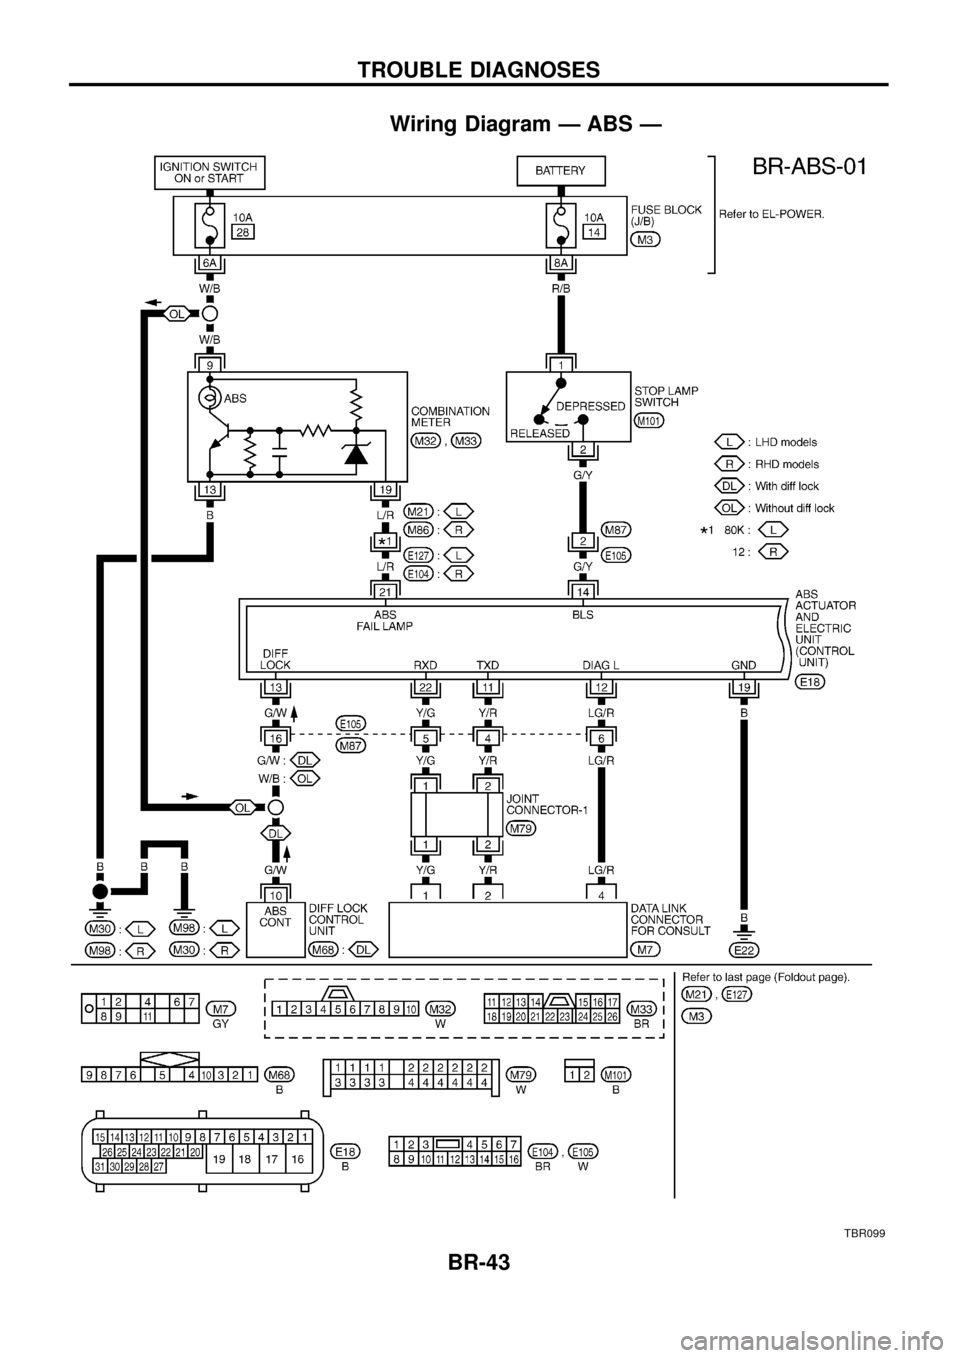 NISSAN PATROL 1998 Y61 / 5.G Brake System User Guide Wiring Diagram Ð ABS Ð
TBR099
TROUBLE DIAGNOSES
BR-43 